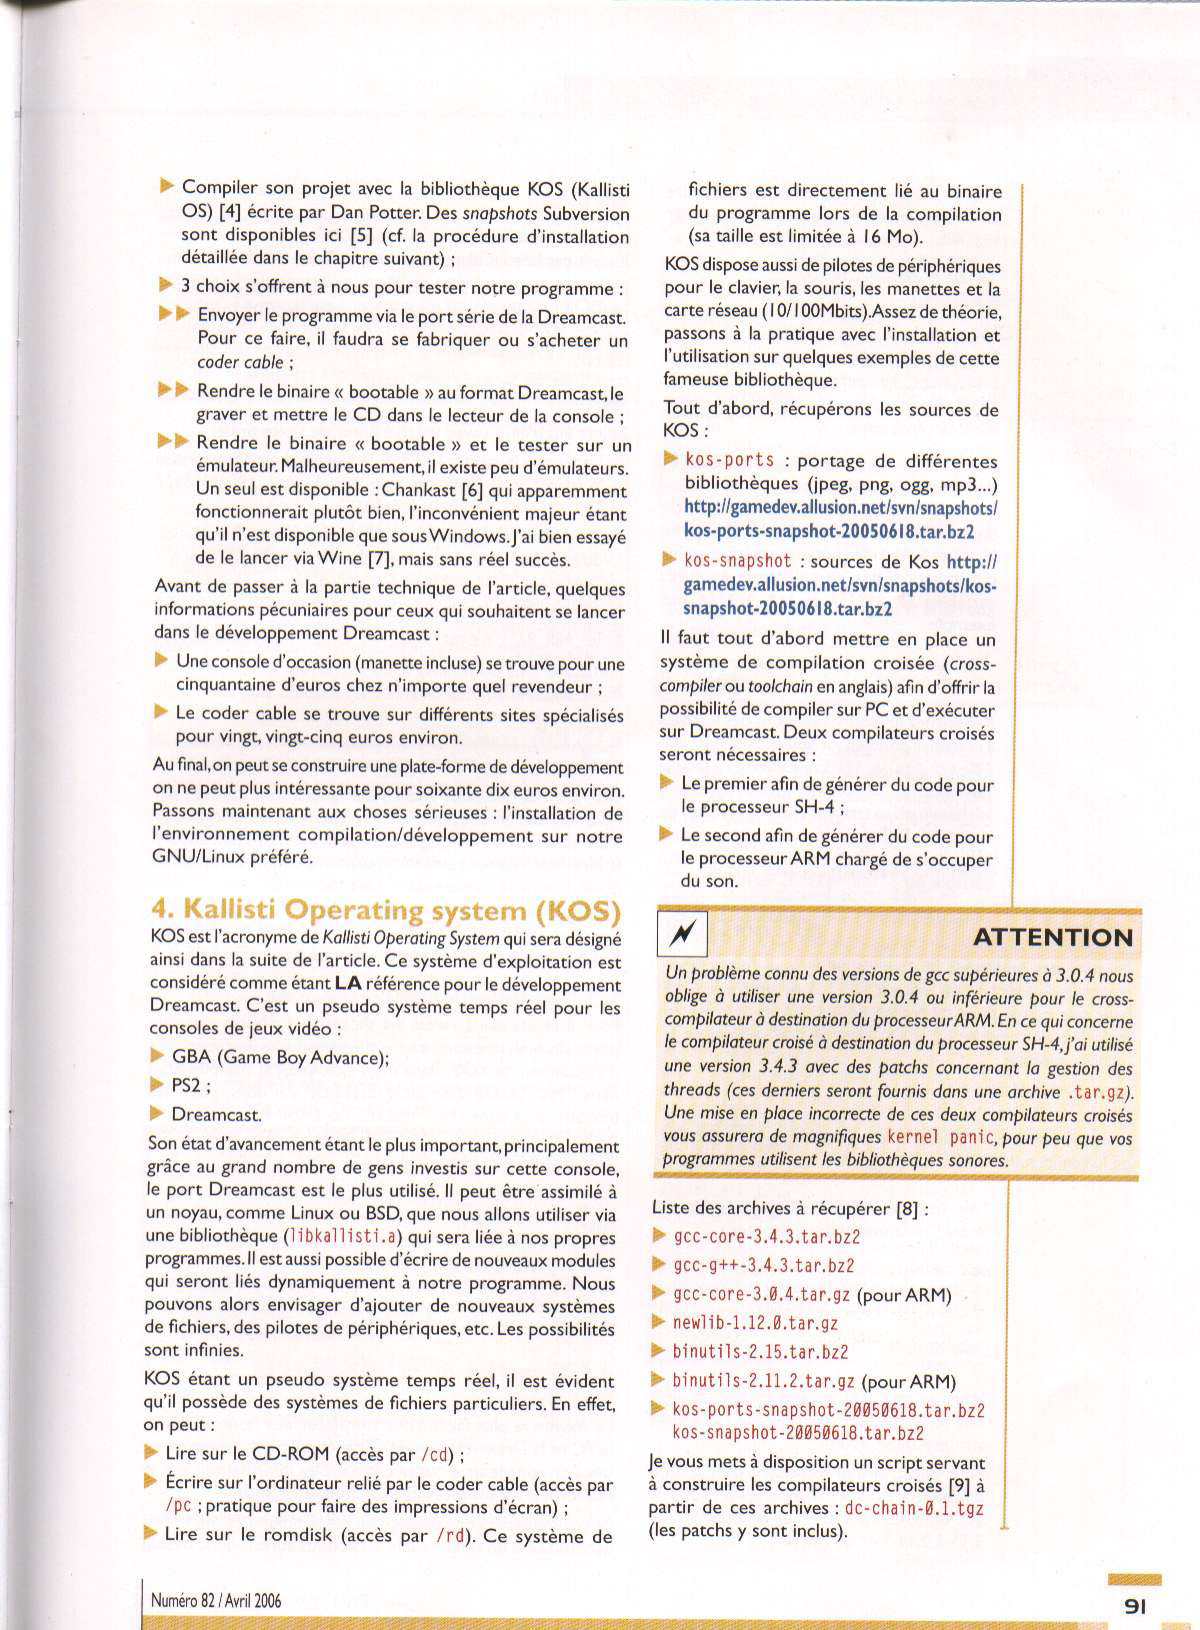 LinuxMagazine82-avril2006_Page_84